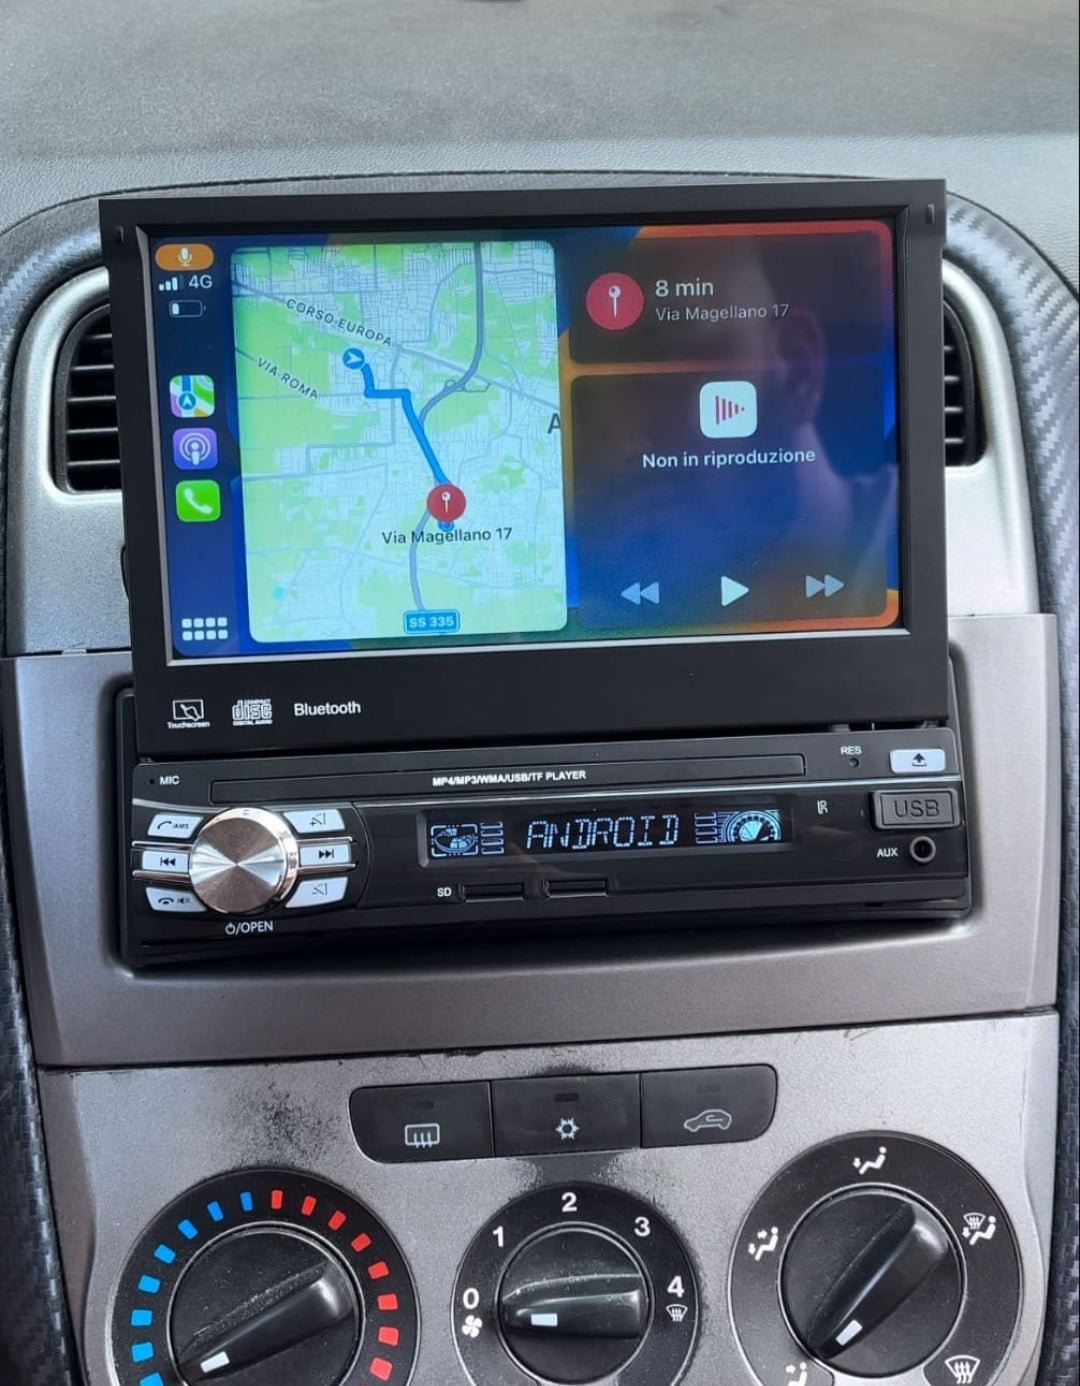 Autoradio Universale [MOTORIZZATO] - Android, 1Din 7"Pollici, Android, GPS, WiFi, Radio, Bluetooth, FM, SWC, PlayStore.